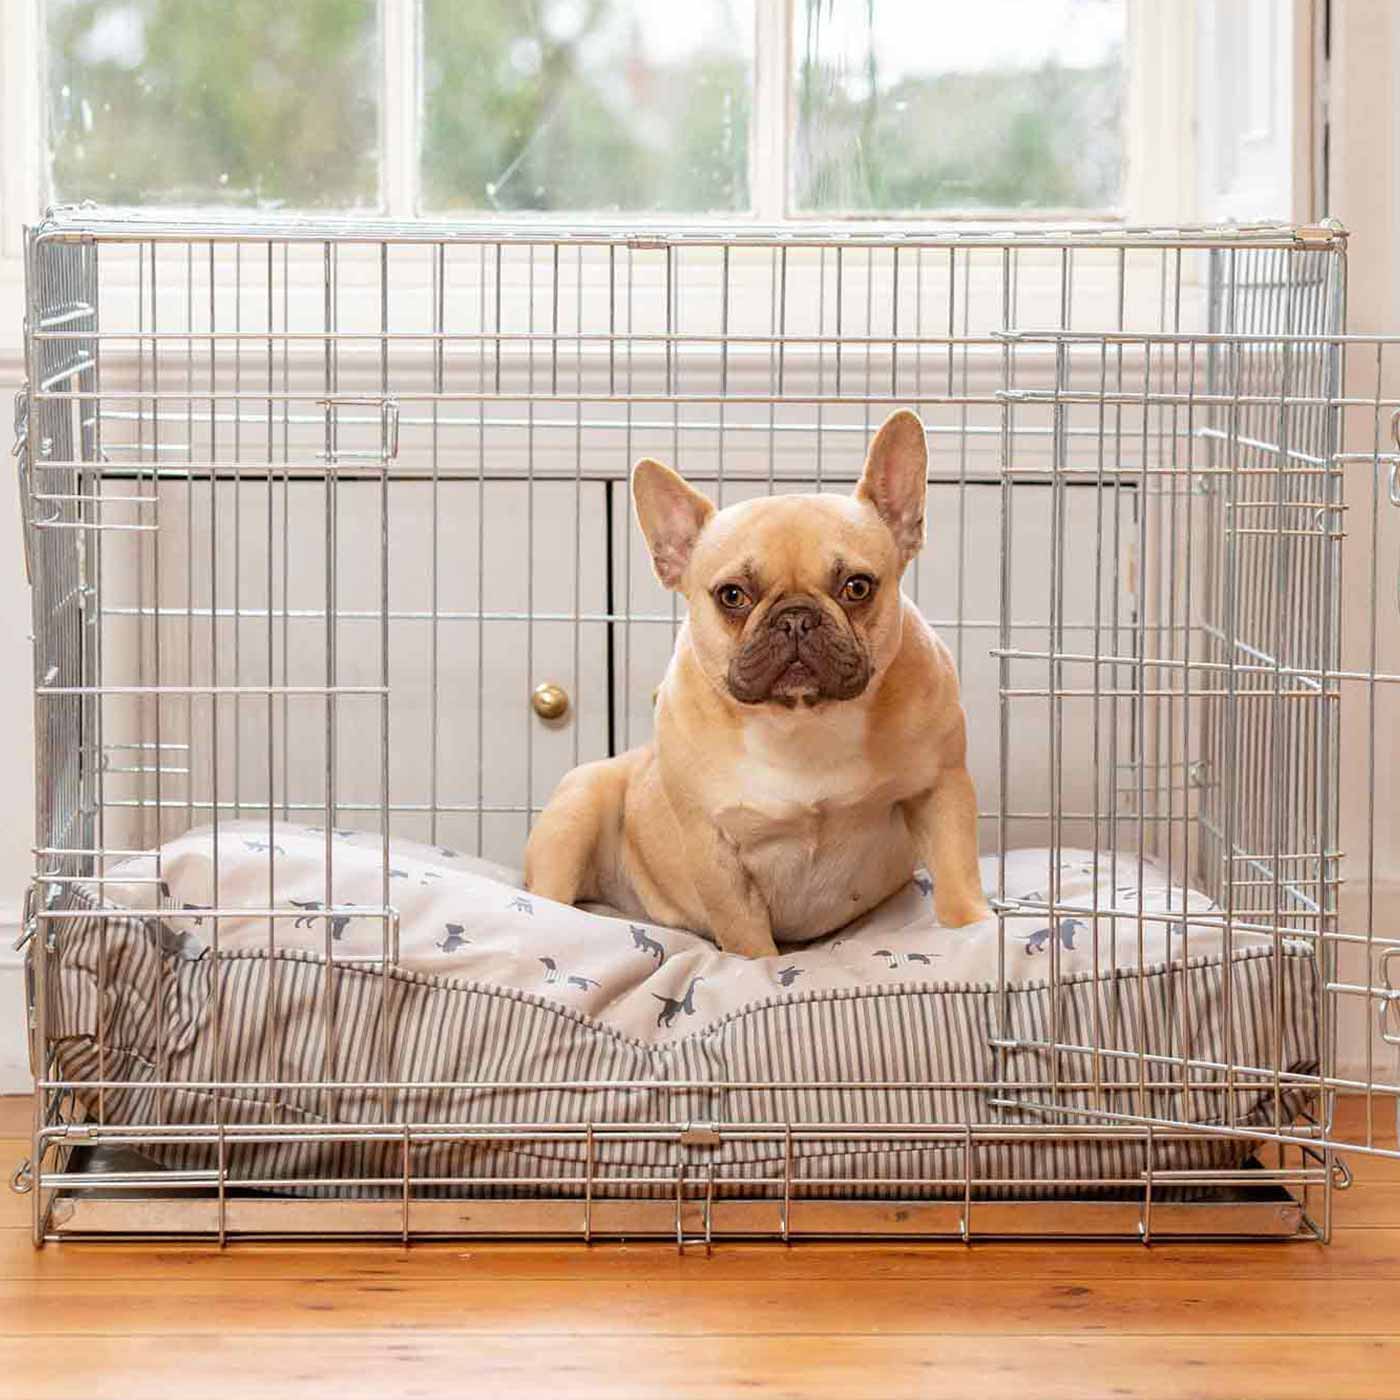 Imperfect Dog Cushion In Cosmopolitan Dog